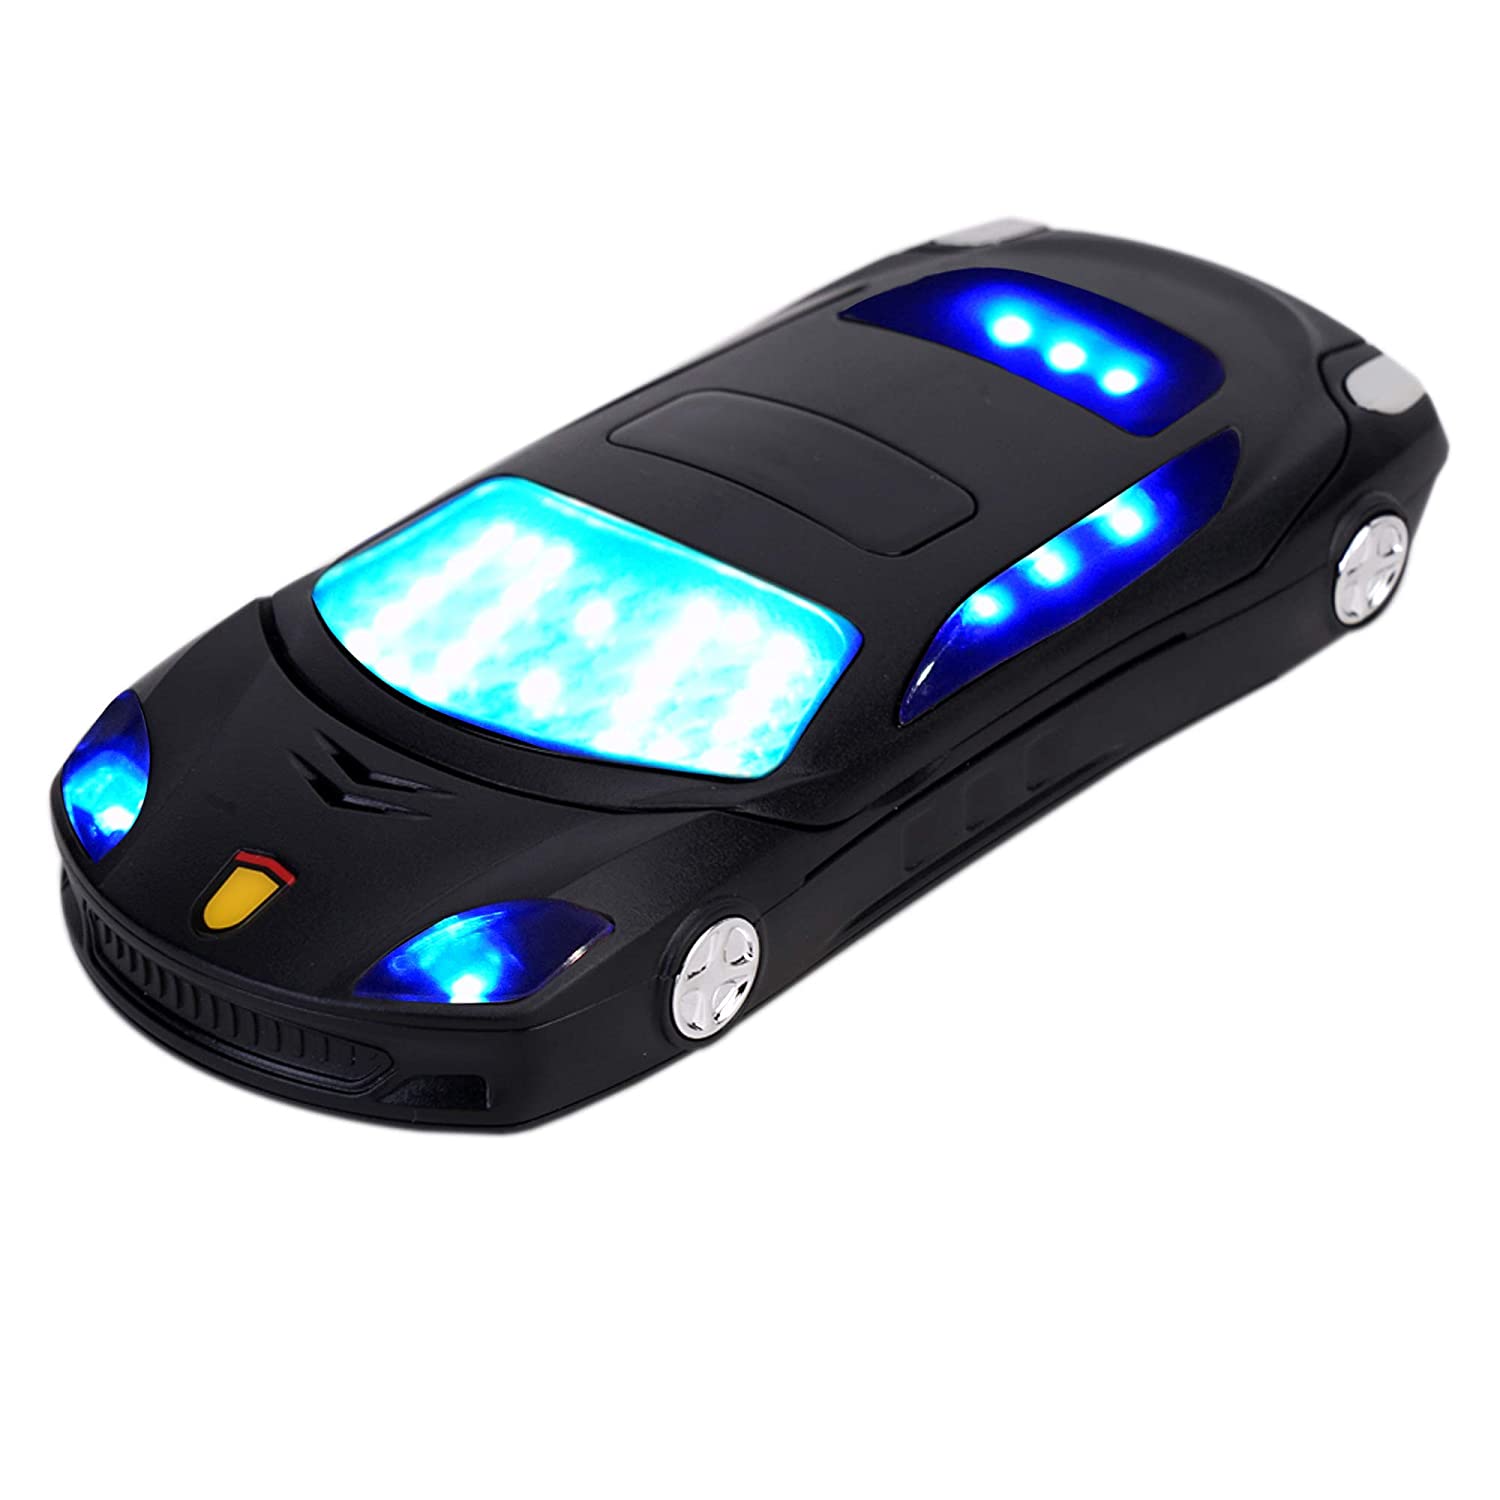 Car Flip Keypad Mobile Phone with Dual Sim, Camera and Flashlight